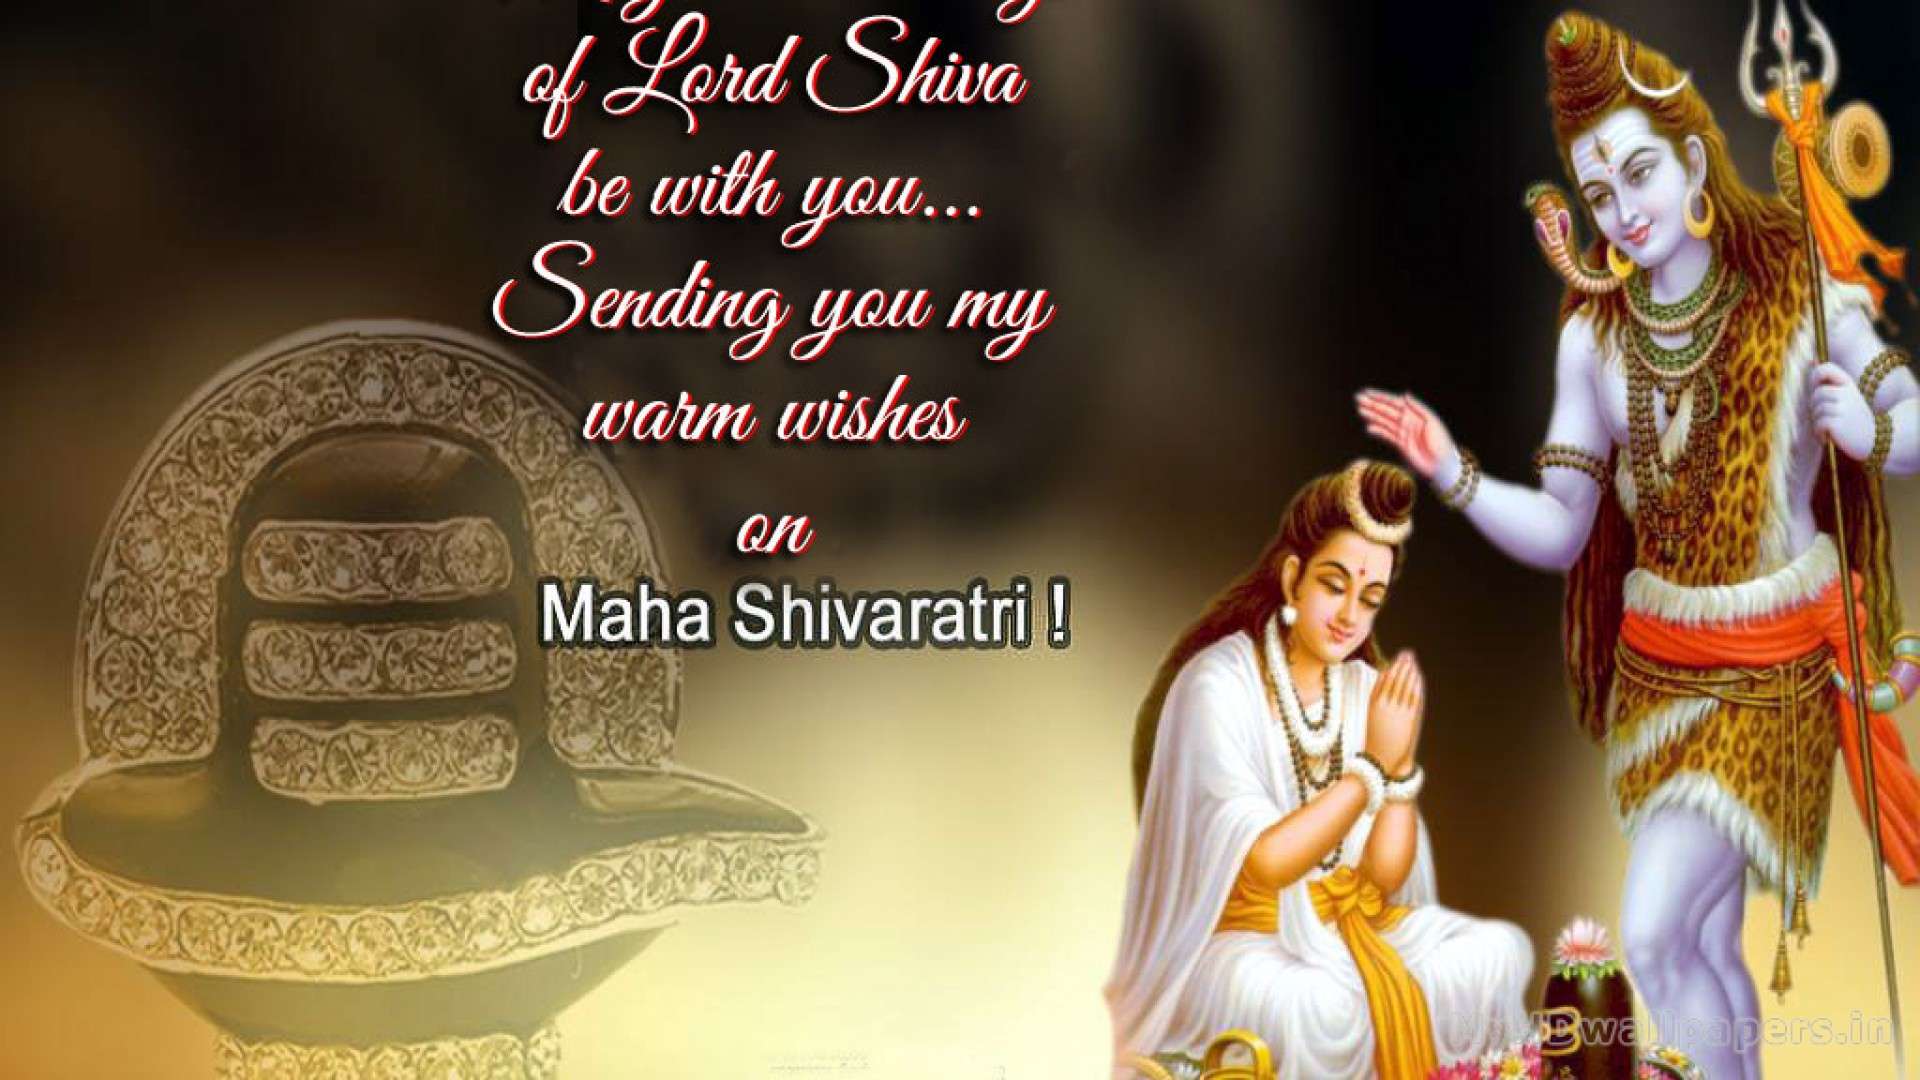 Of Maha Shivaratri Wallpaper Desktop HD